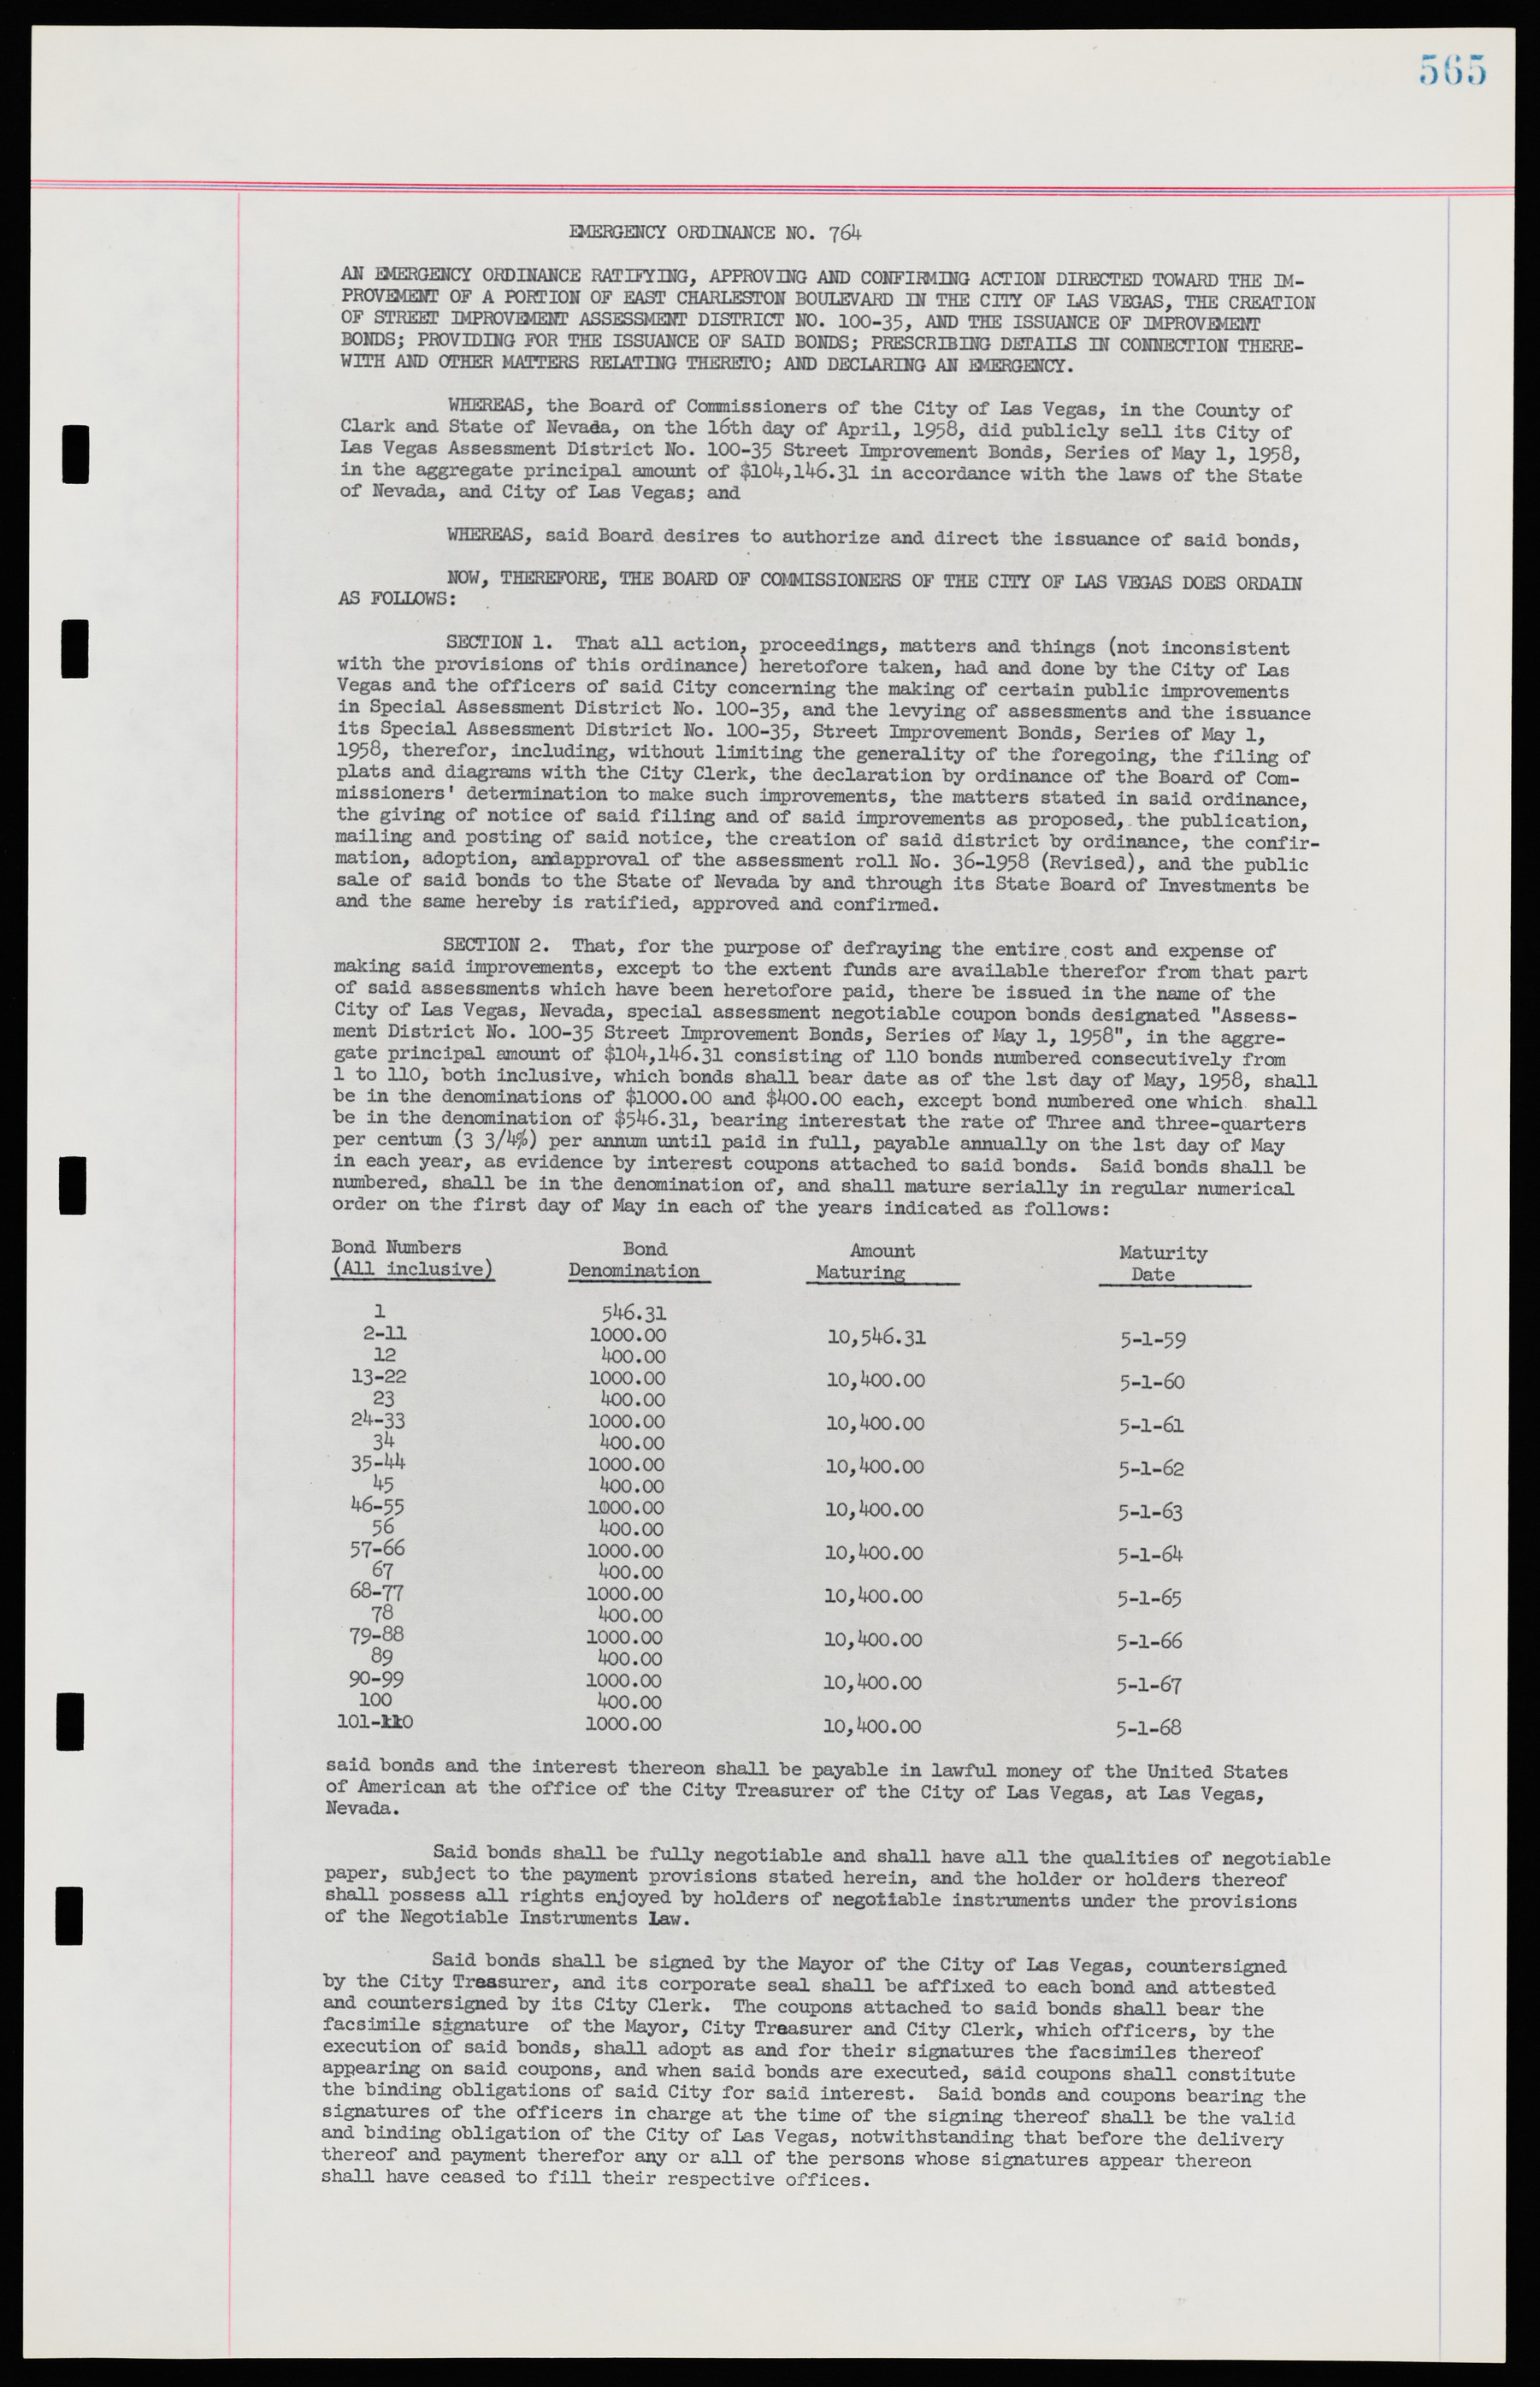 Las Vegas City Ordinances, November 13, 1950 to August 6, 1958, lvc000015-573